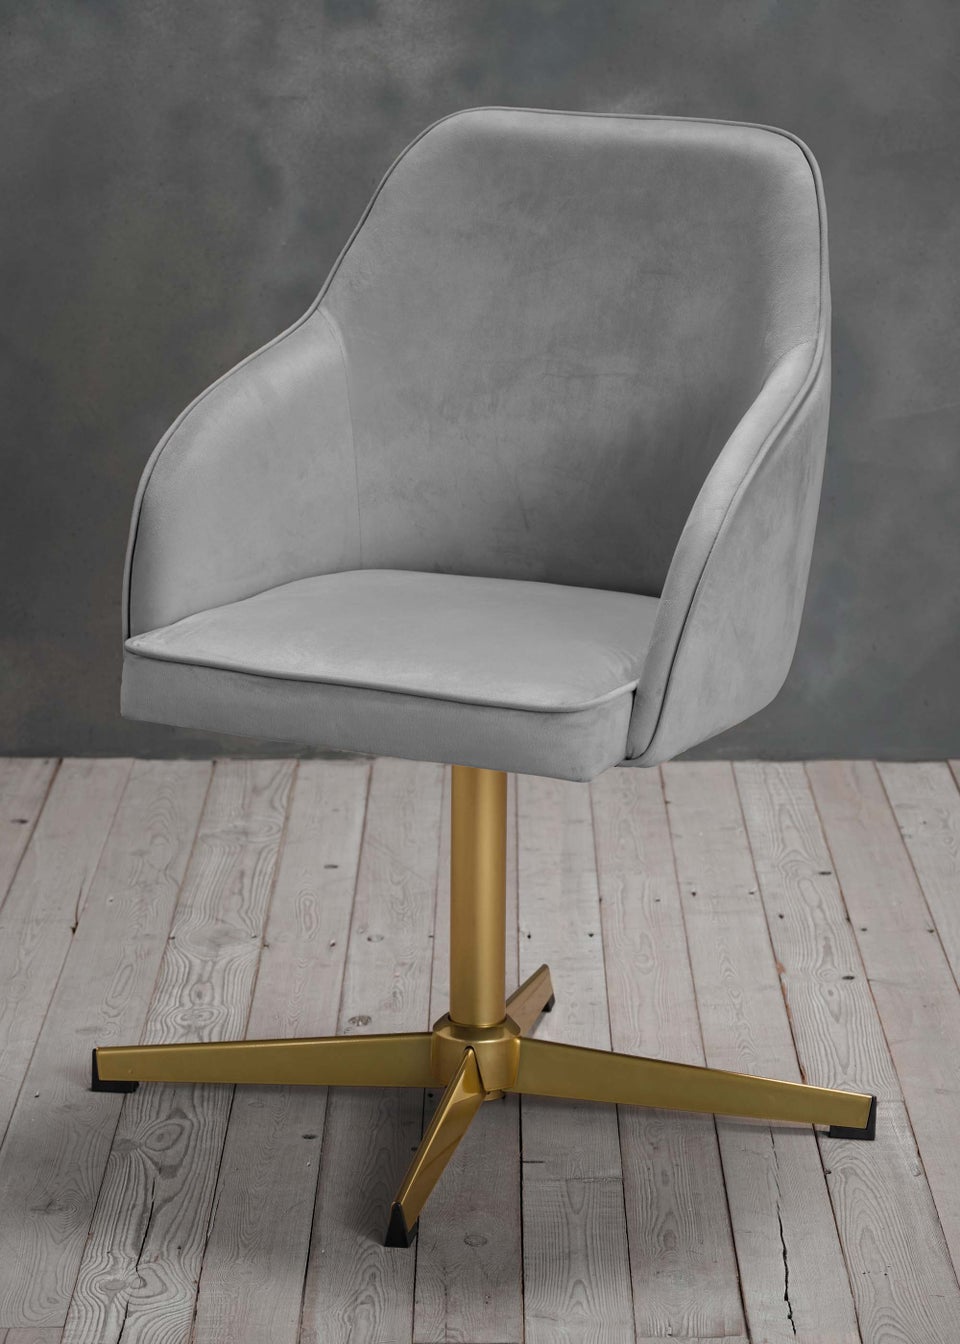 LPD Furniture Felix Office Chair Grey (860x570x605mm)